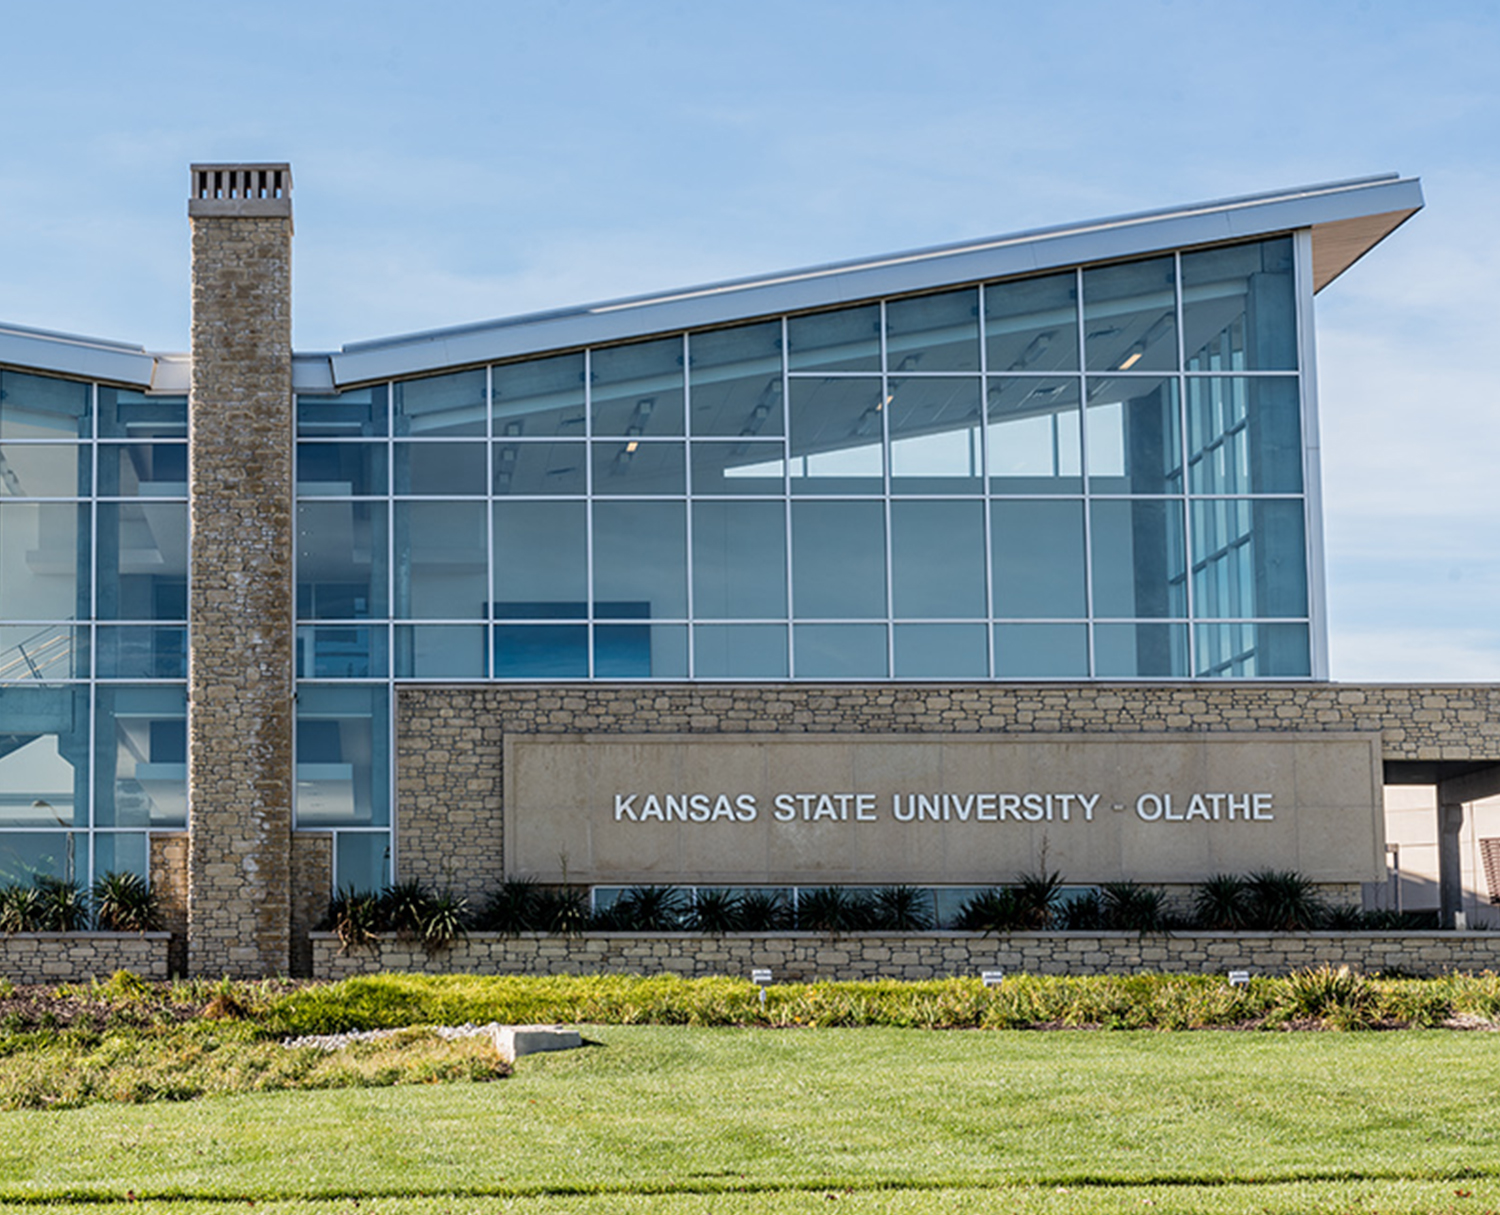 building image of Kansas State University Olathe